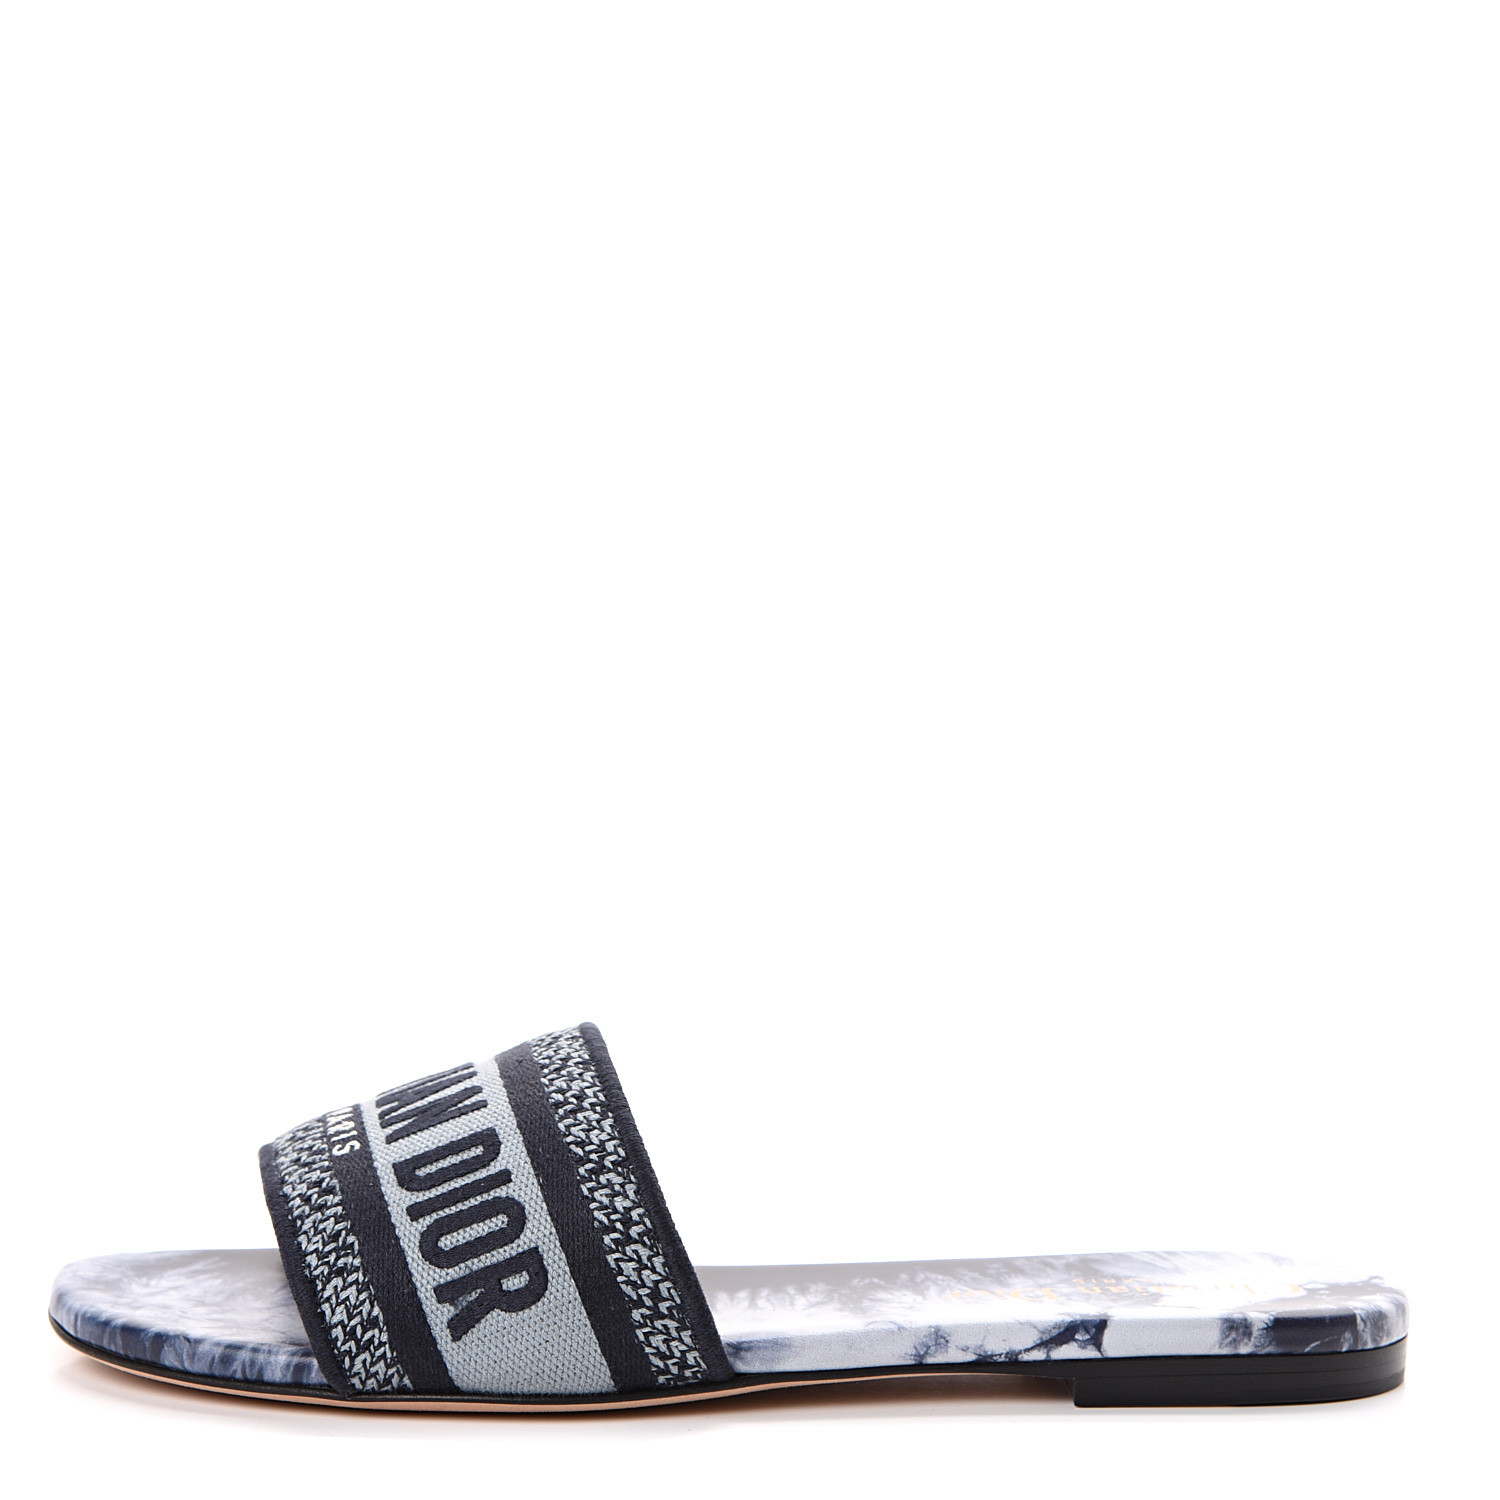 Dior Slide Sandals Flash Sales, UP TO 61% OFF | www.moeembarcelona.com